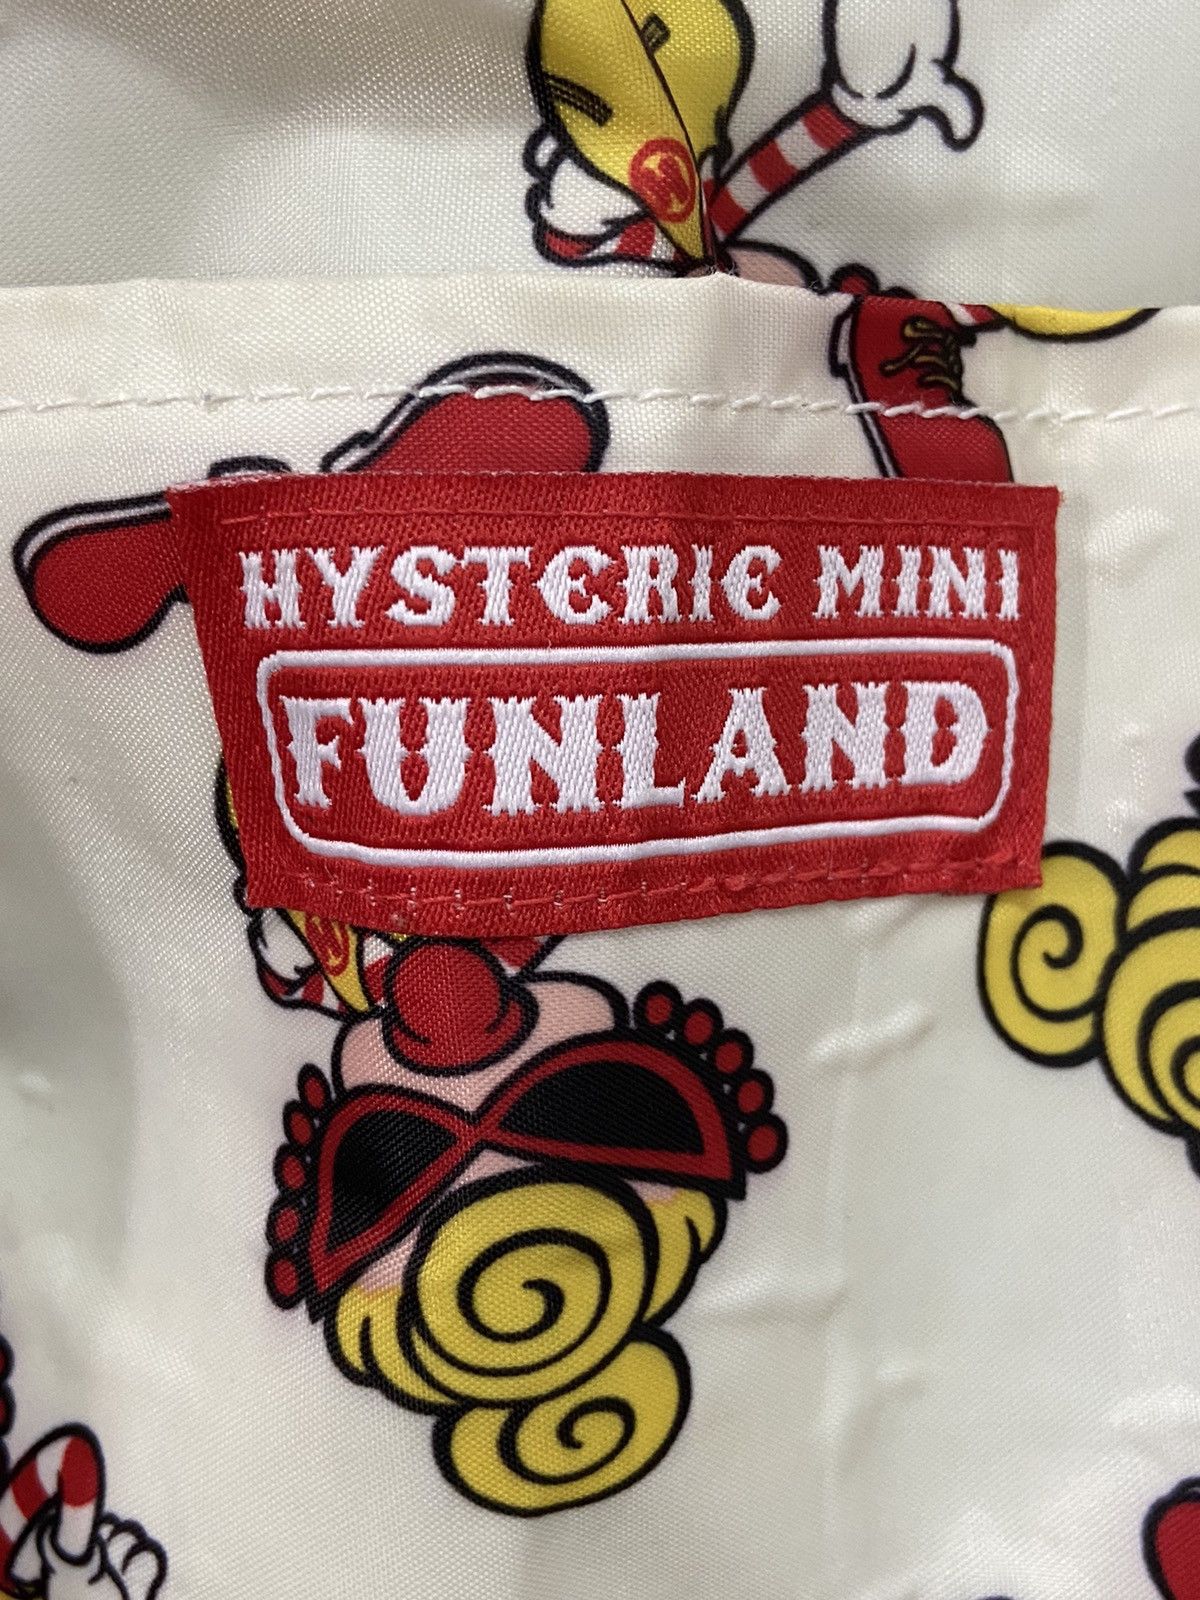 Hysteric Mini Funland Waterproof Tote Bag - 3